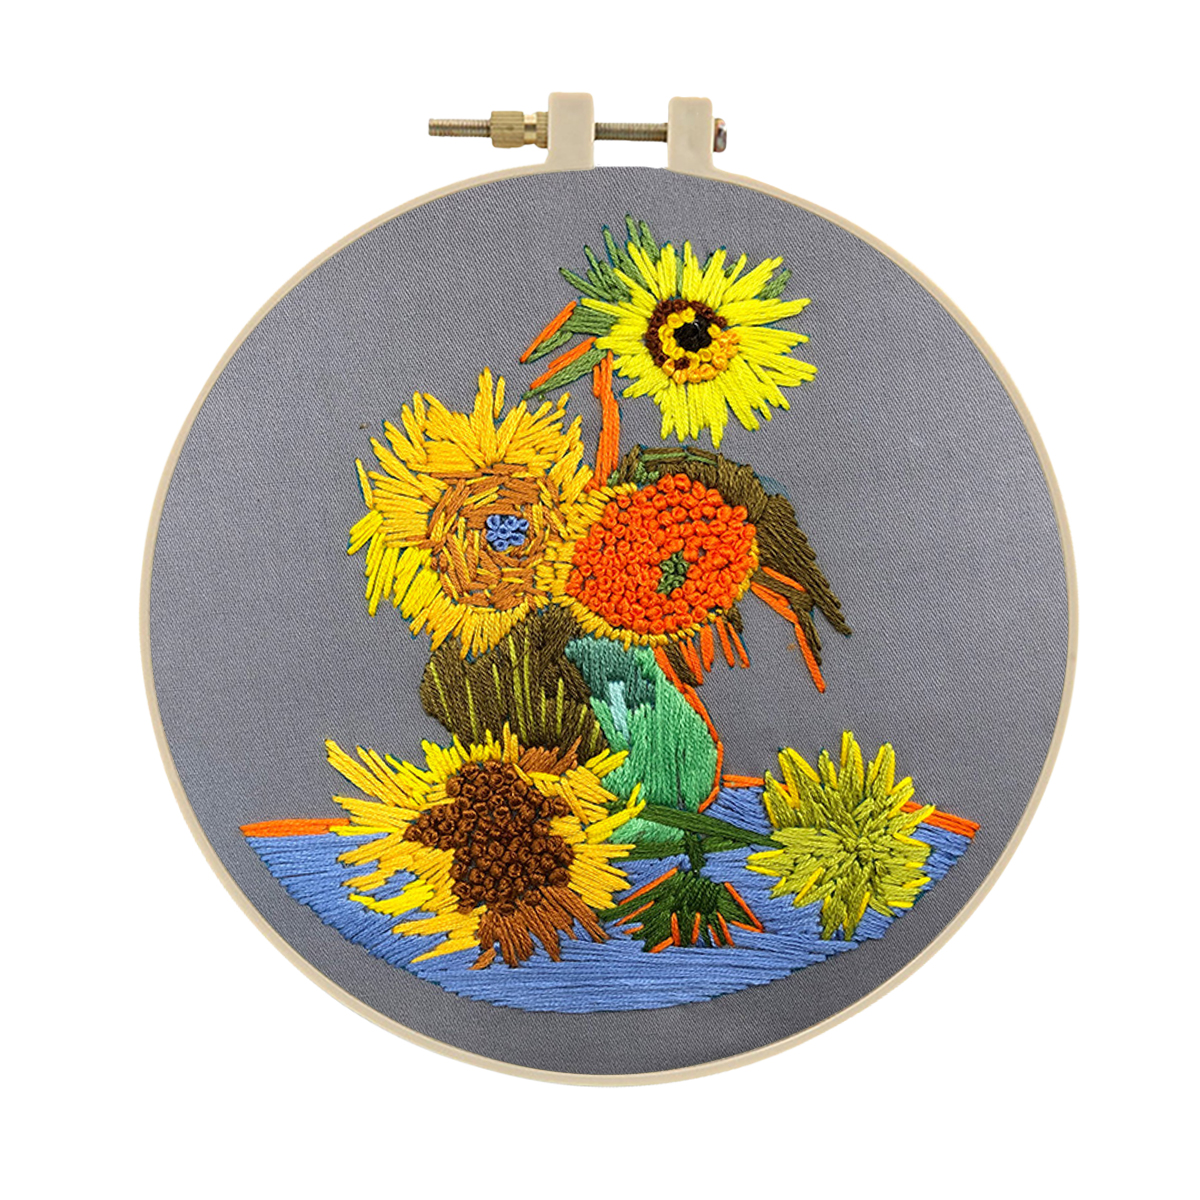 DIY Handmade Embroidery Cross stitch kit for Adult Beginner - Van Gogh Sunflower Pattern